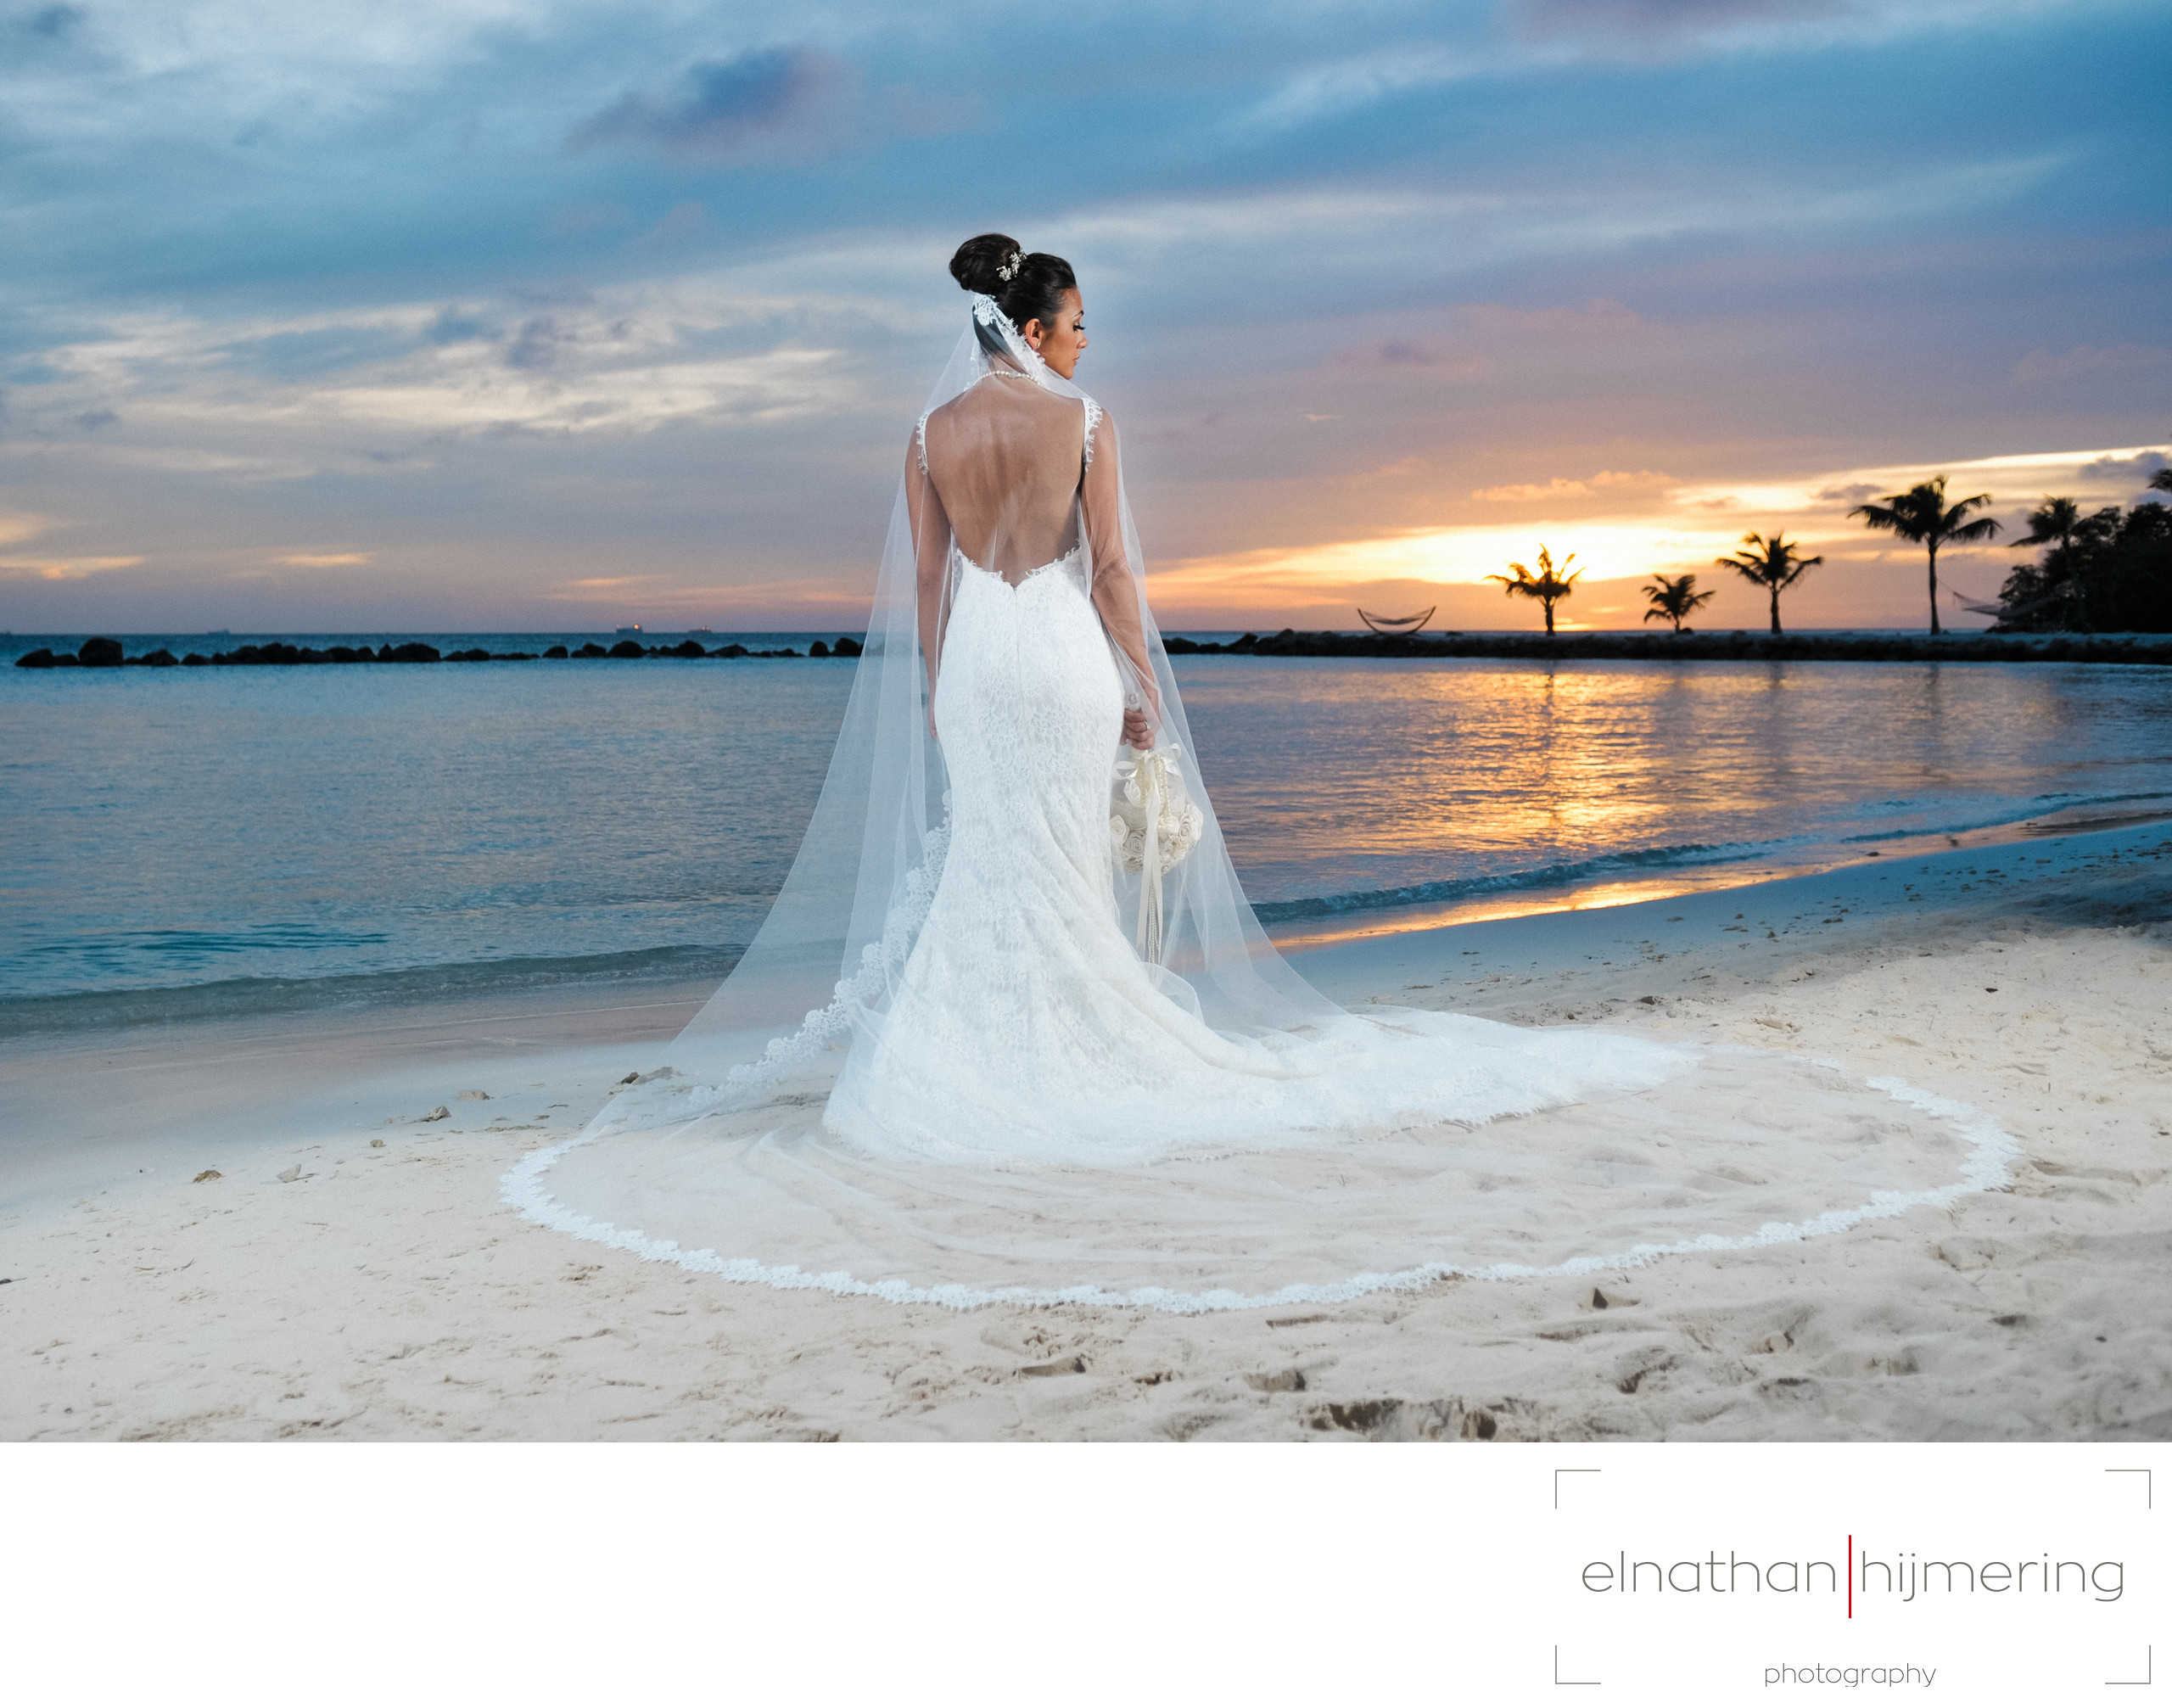 Elegant Bridal Gown On Beach Sunset Novia En Playa Aruba Wedding Photographer Elnathan 1463